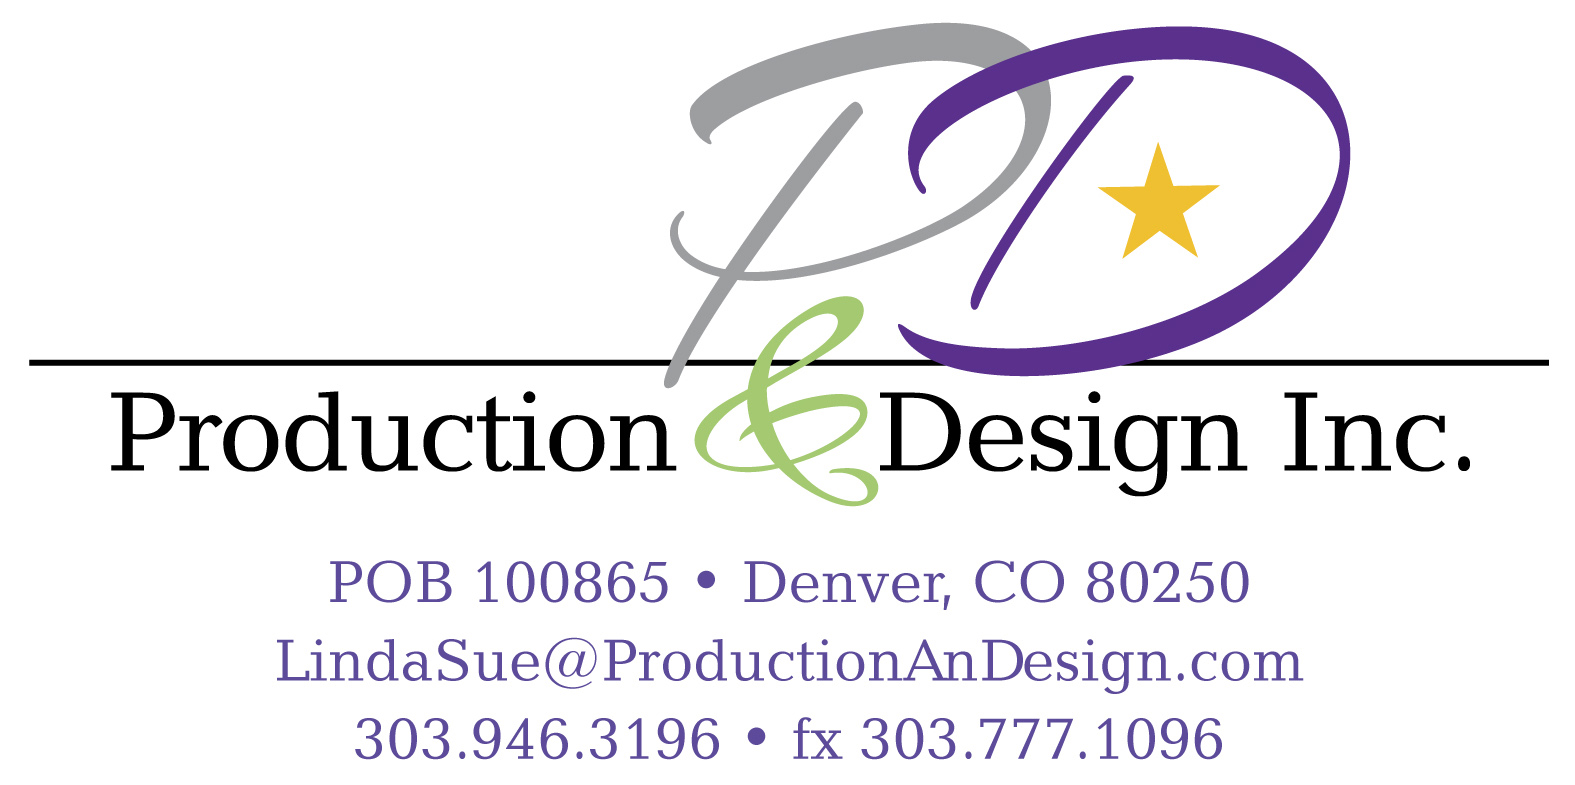 Production & Design, Inc. Logo